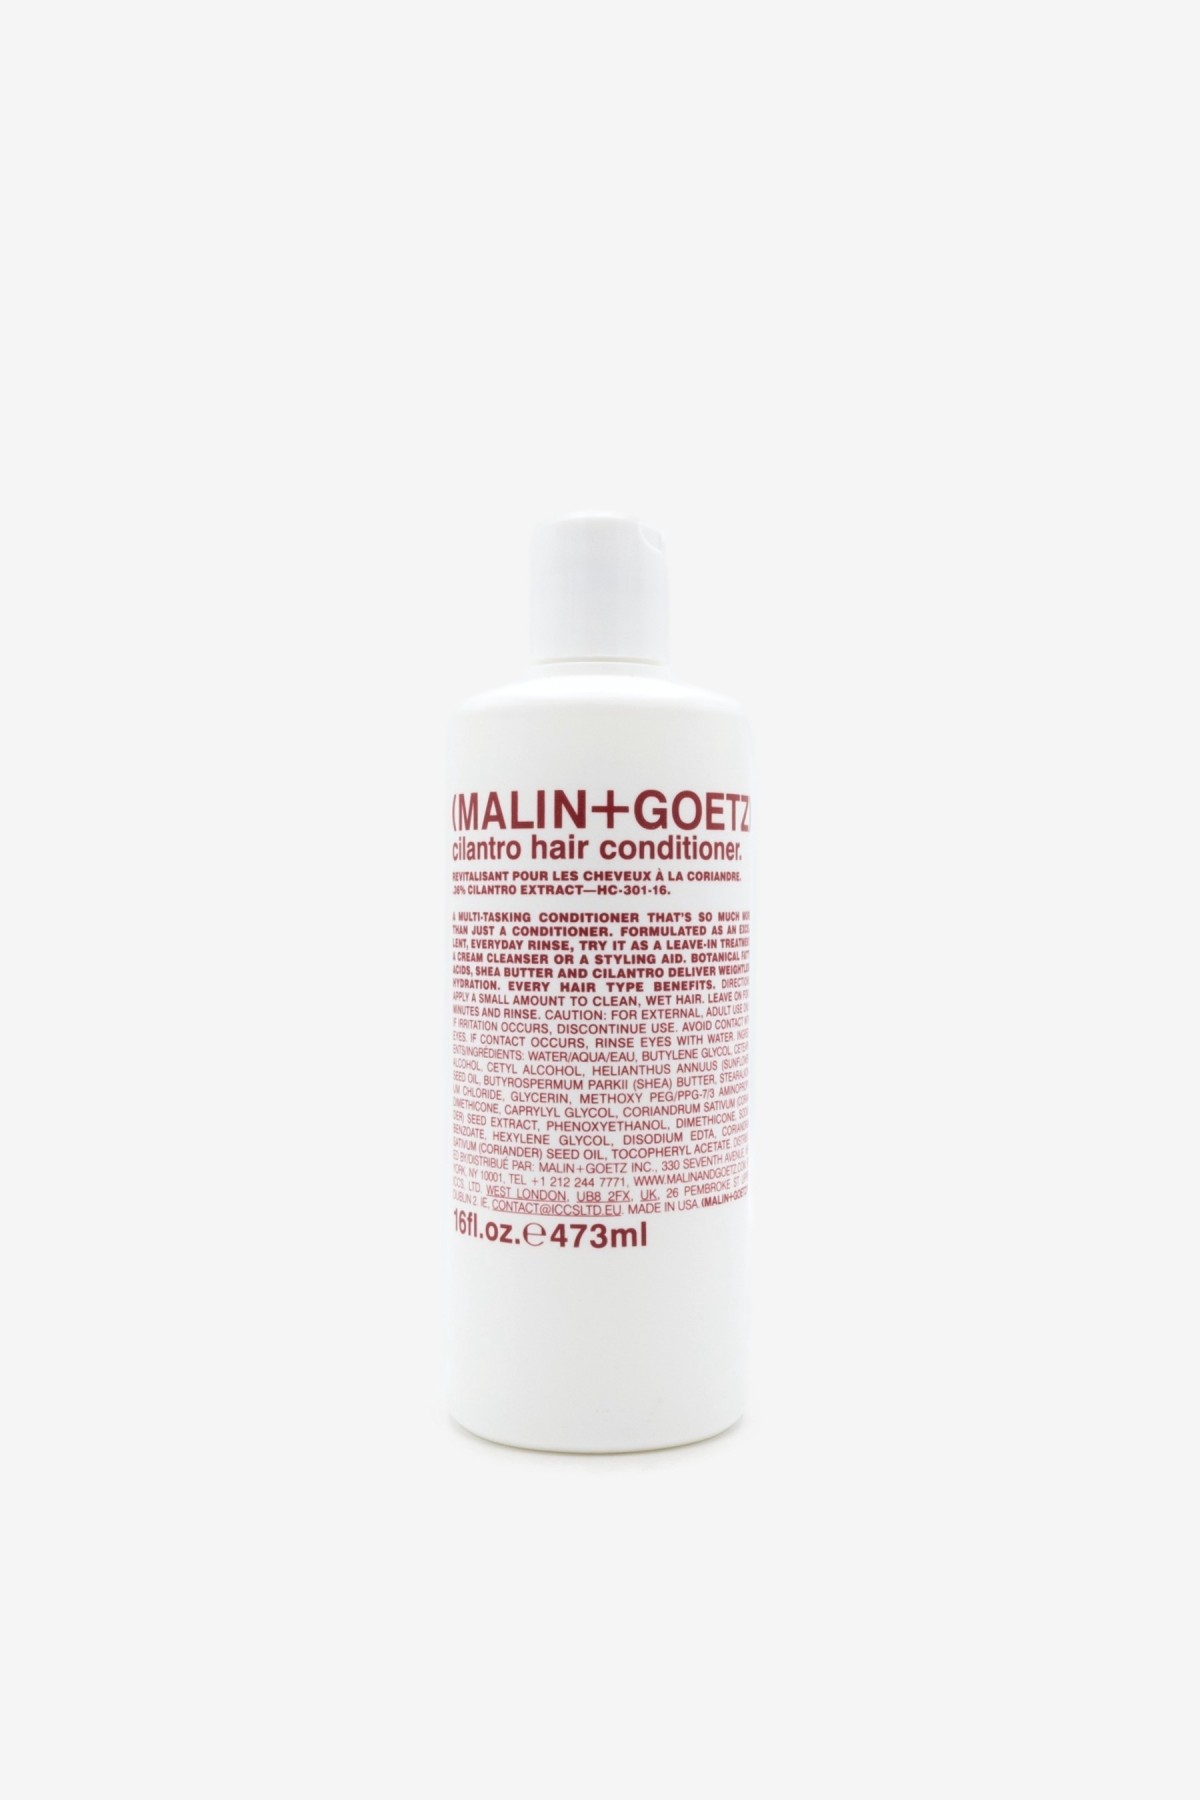 Malin+Goetz Cilantro Hair Conditioner 473ml in 